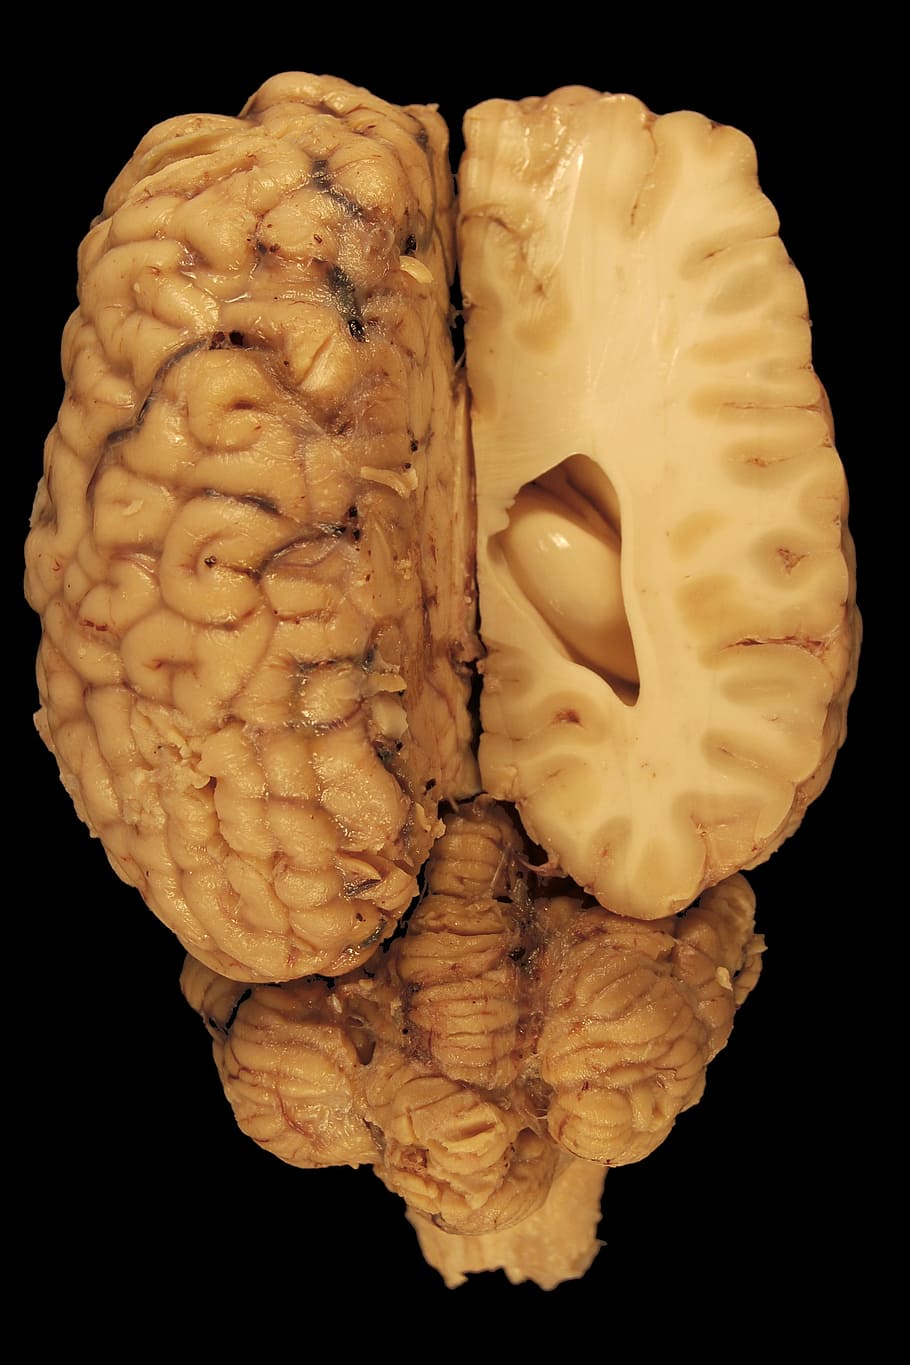 papel de parede do cérebro humano, Cérebro, Anatomia, Olhos, Cavalo, Paerparat, biologia, dorsal, corpo, medicina veterinária